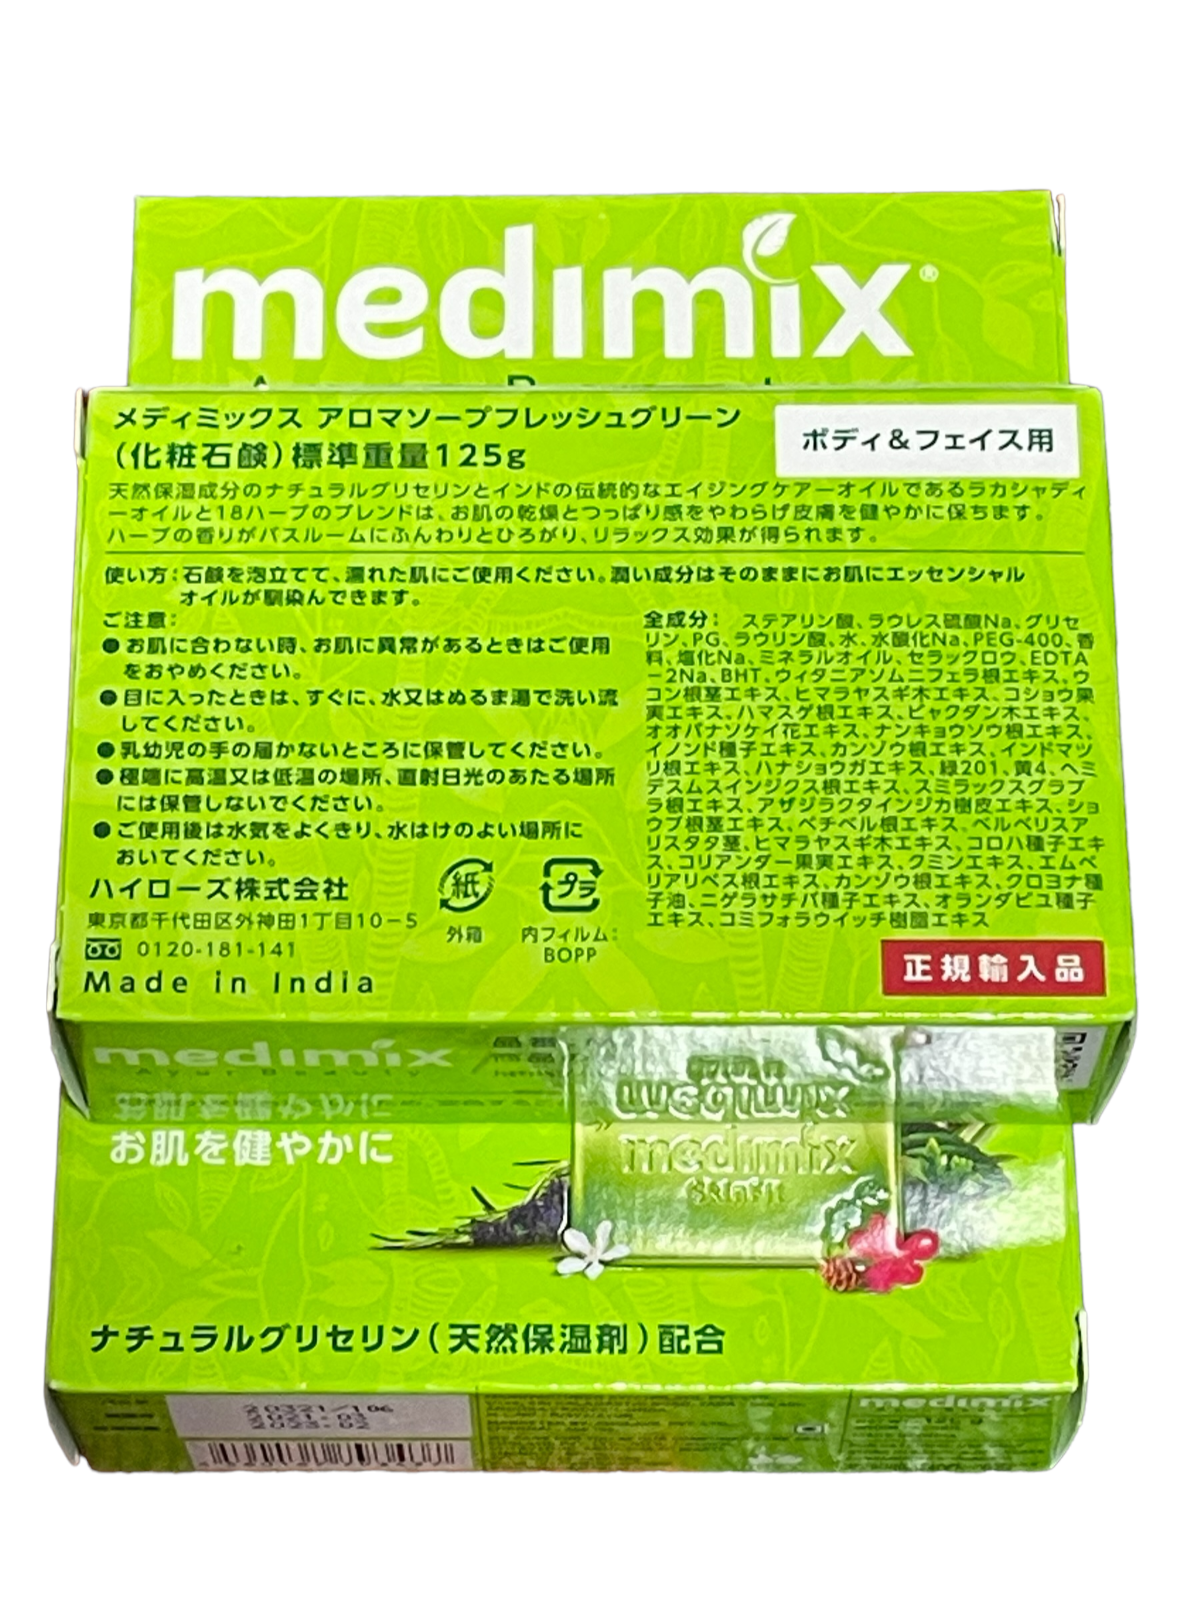 medimix メディミックス 石鹸 125g 全部セットです。 - 基礎化粧品